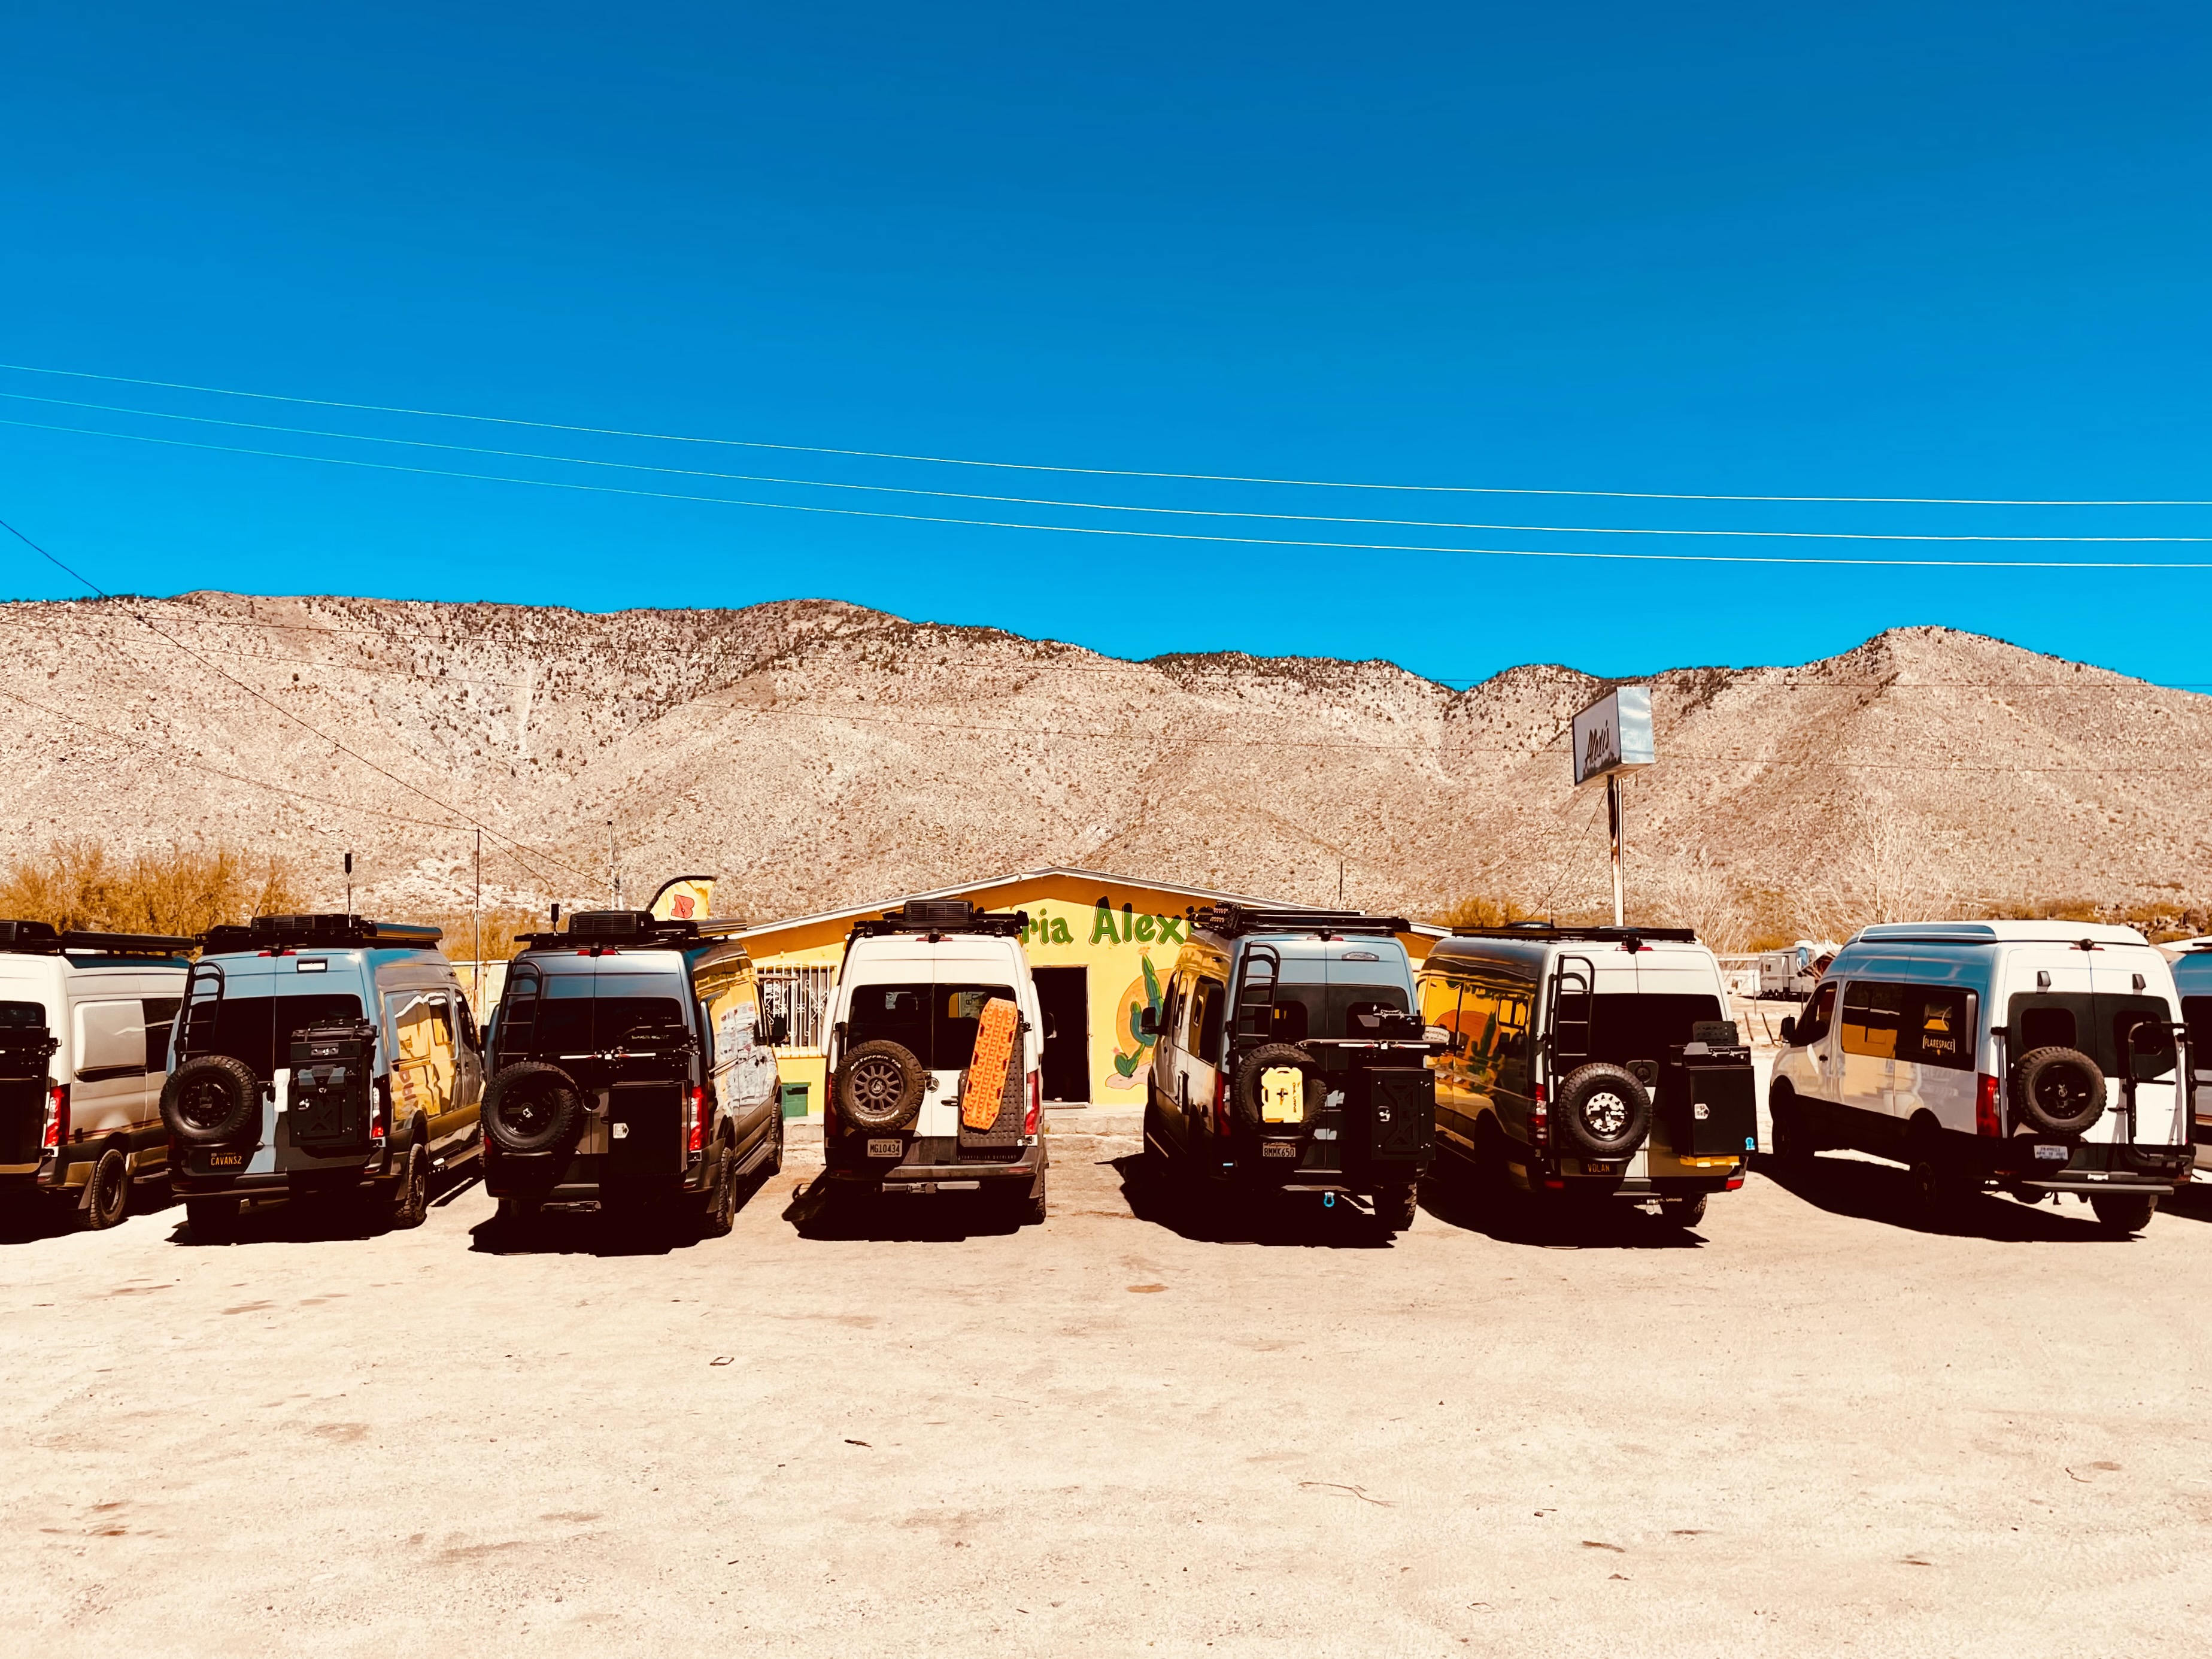 Vans in Baja California, Mexico